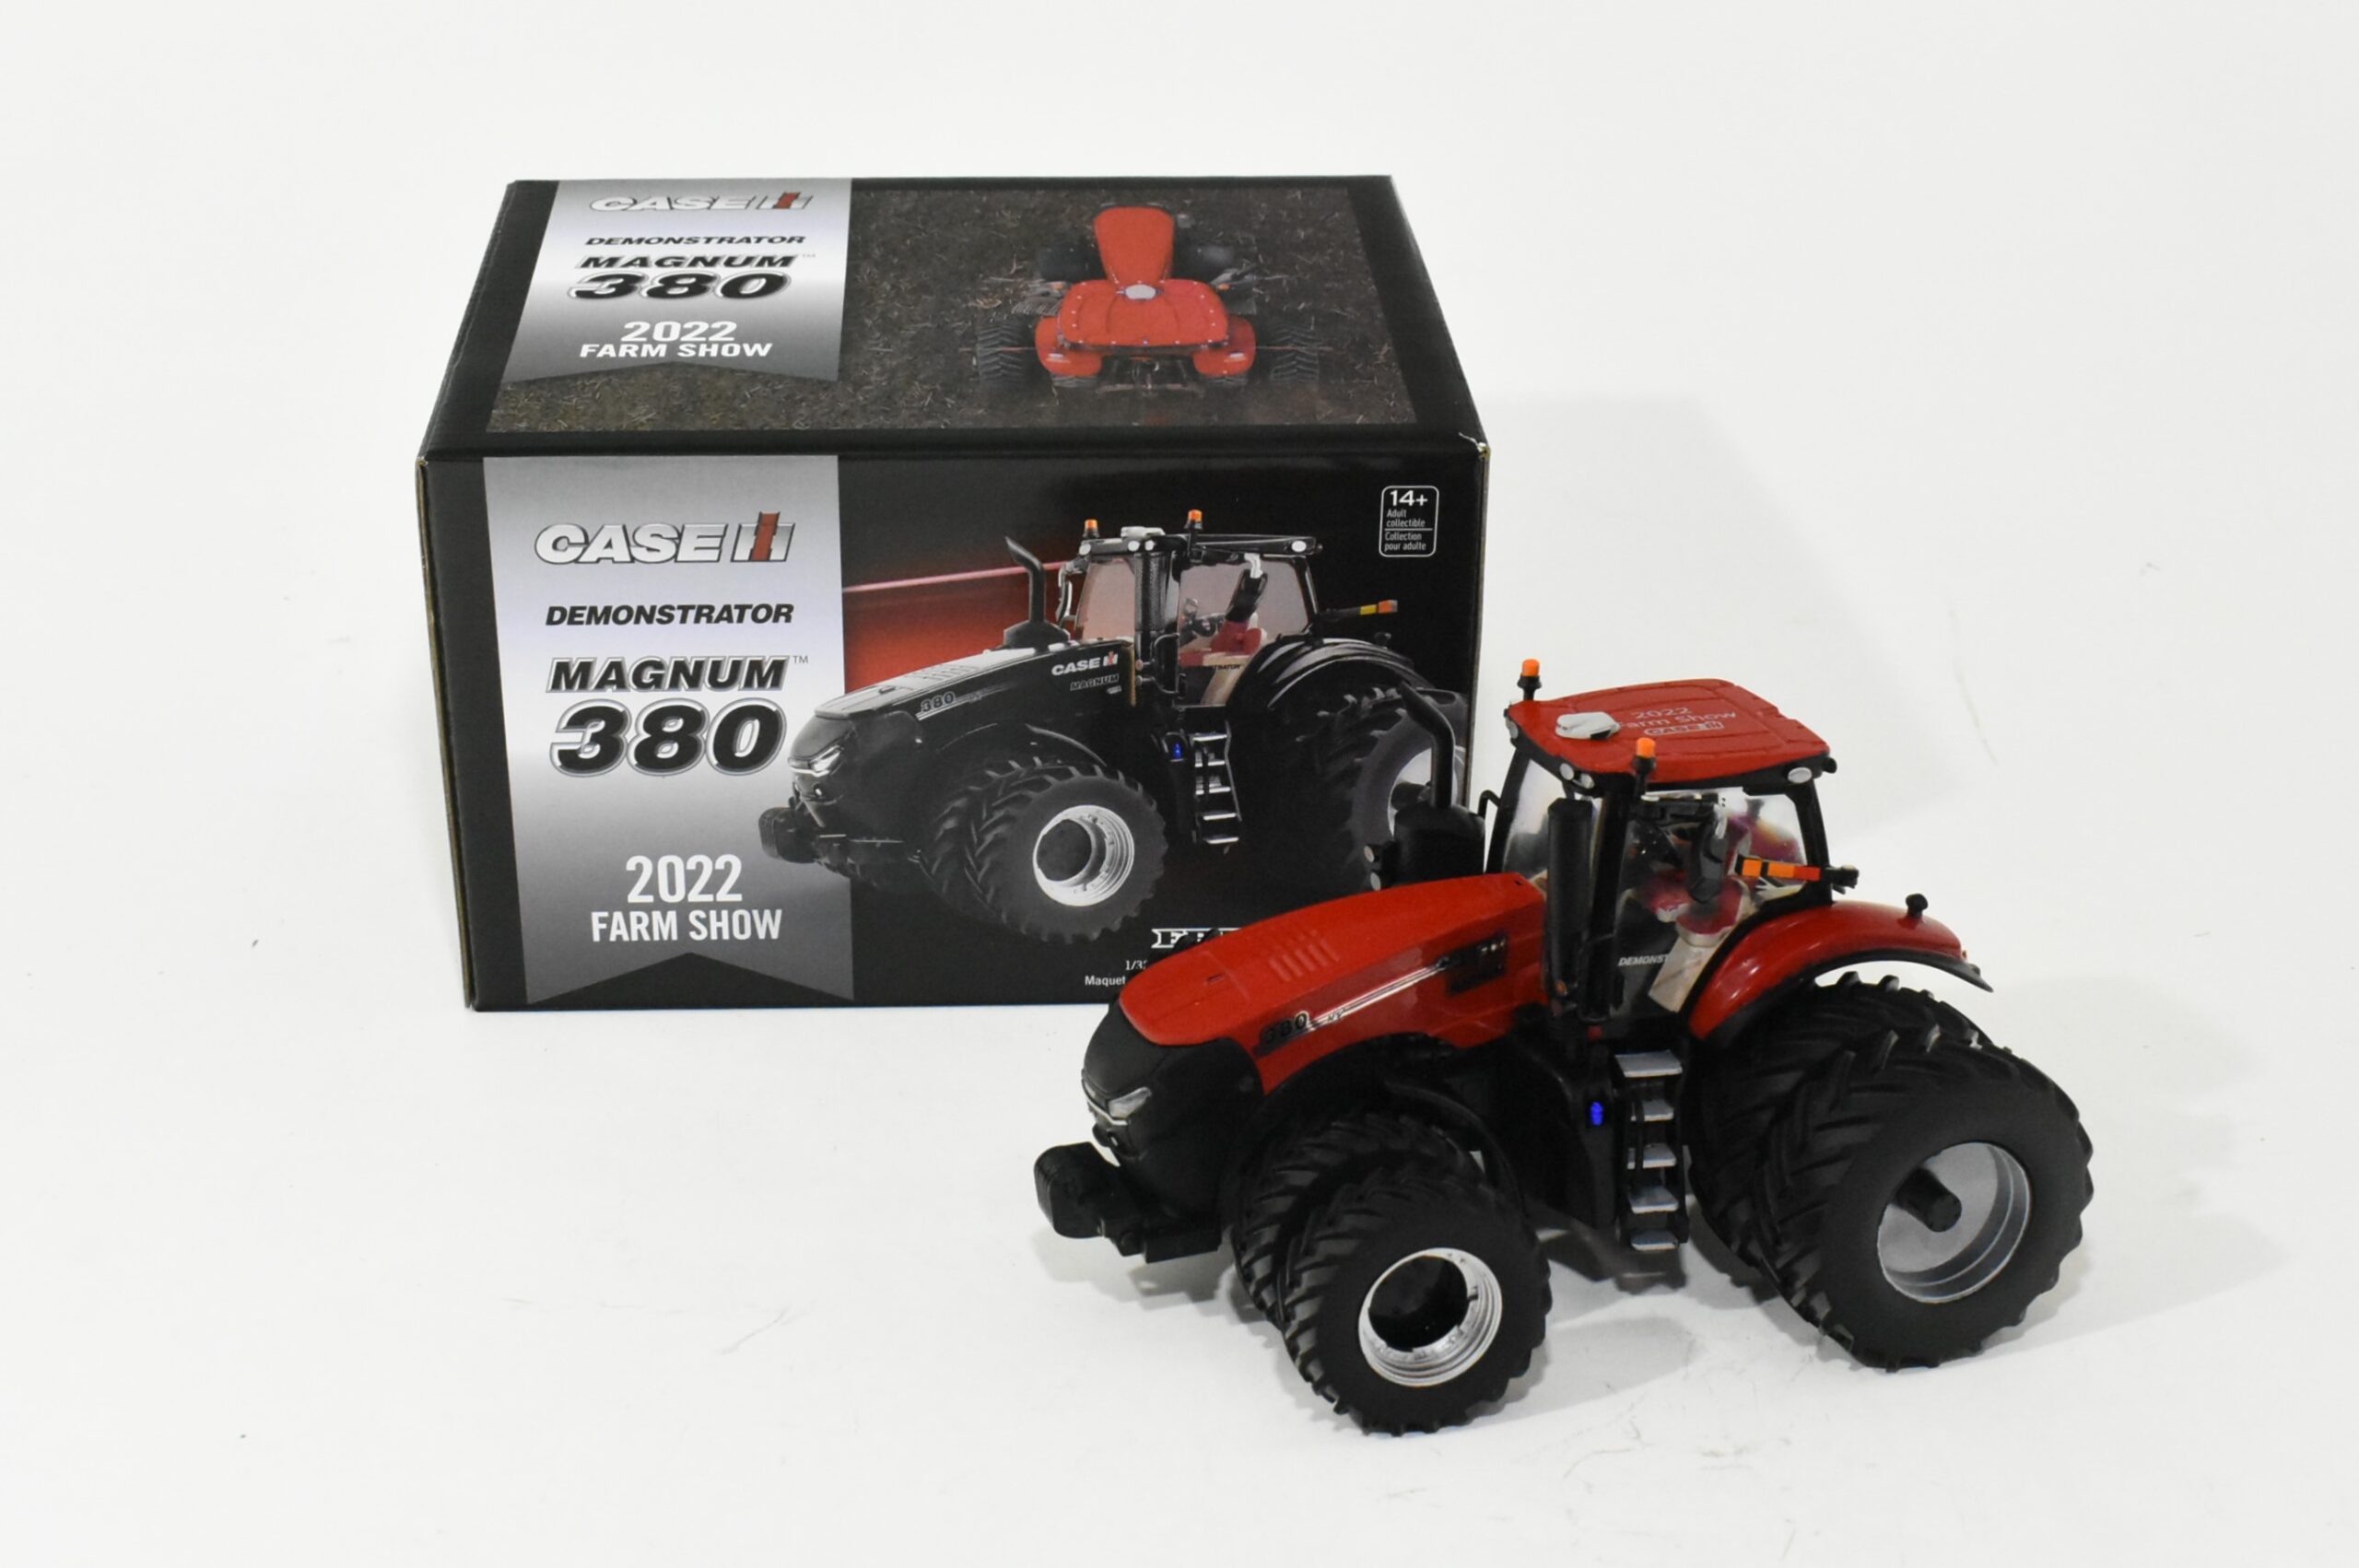 case tractors toys